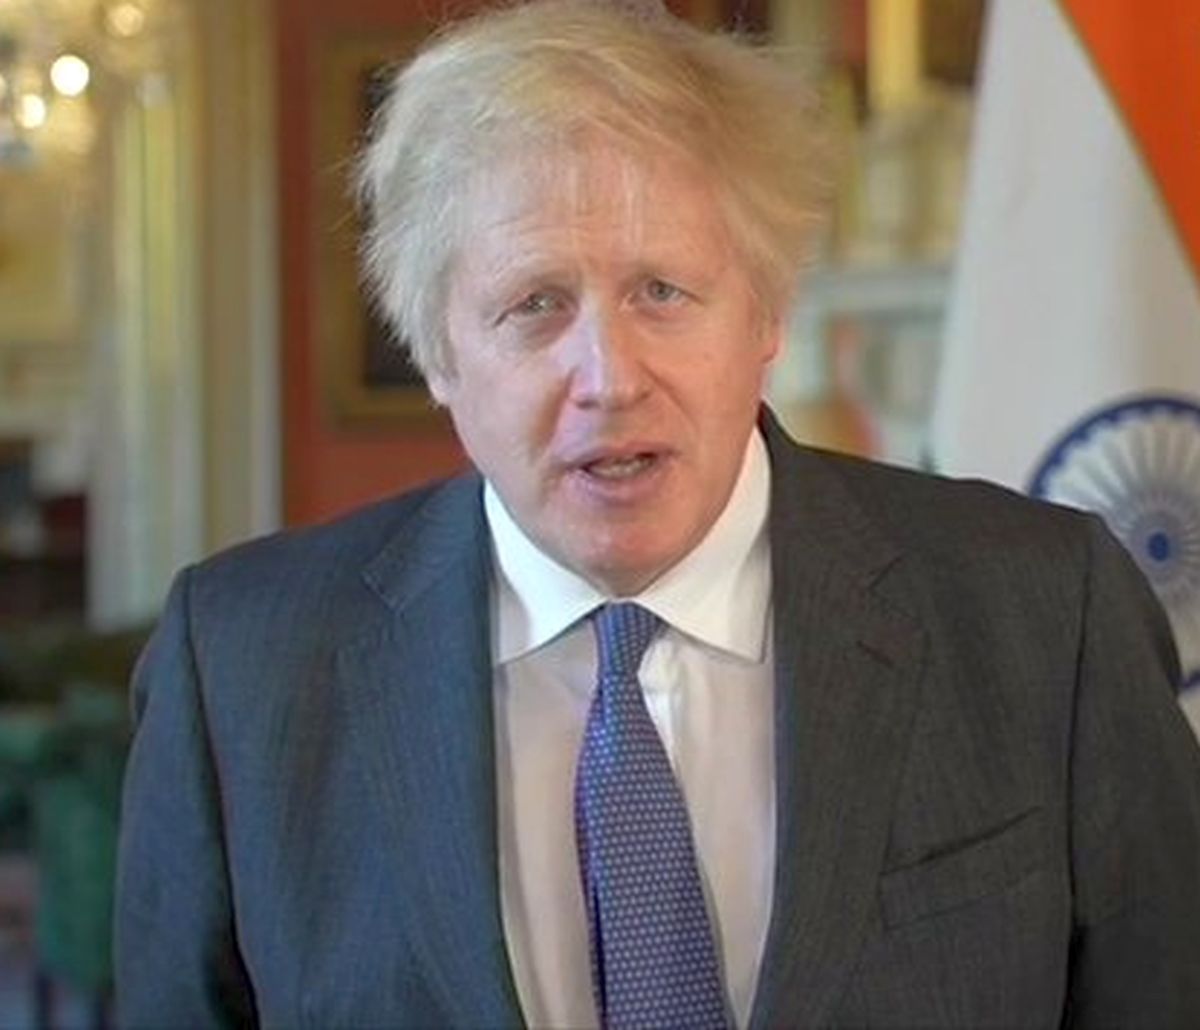 British PM cancels India visit due to COVID crisis